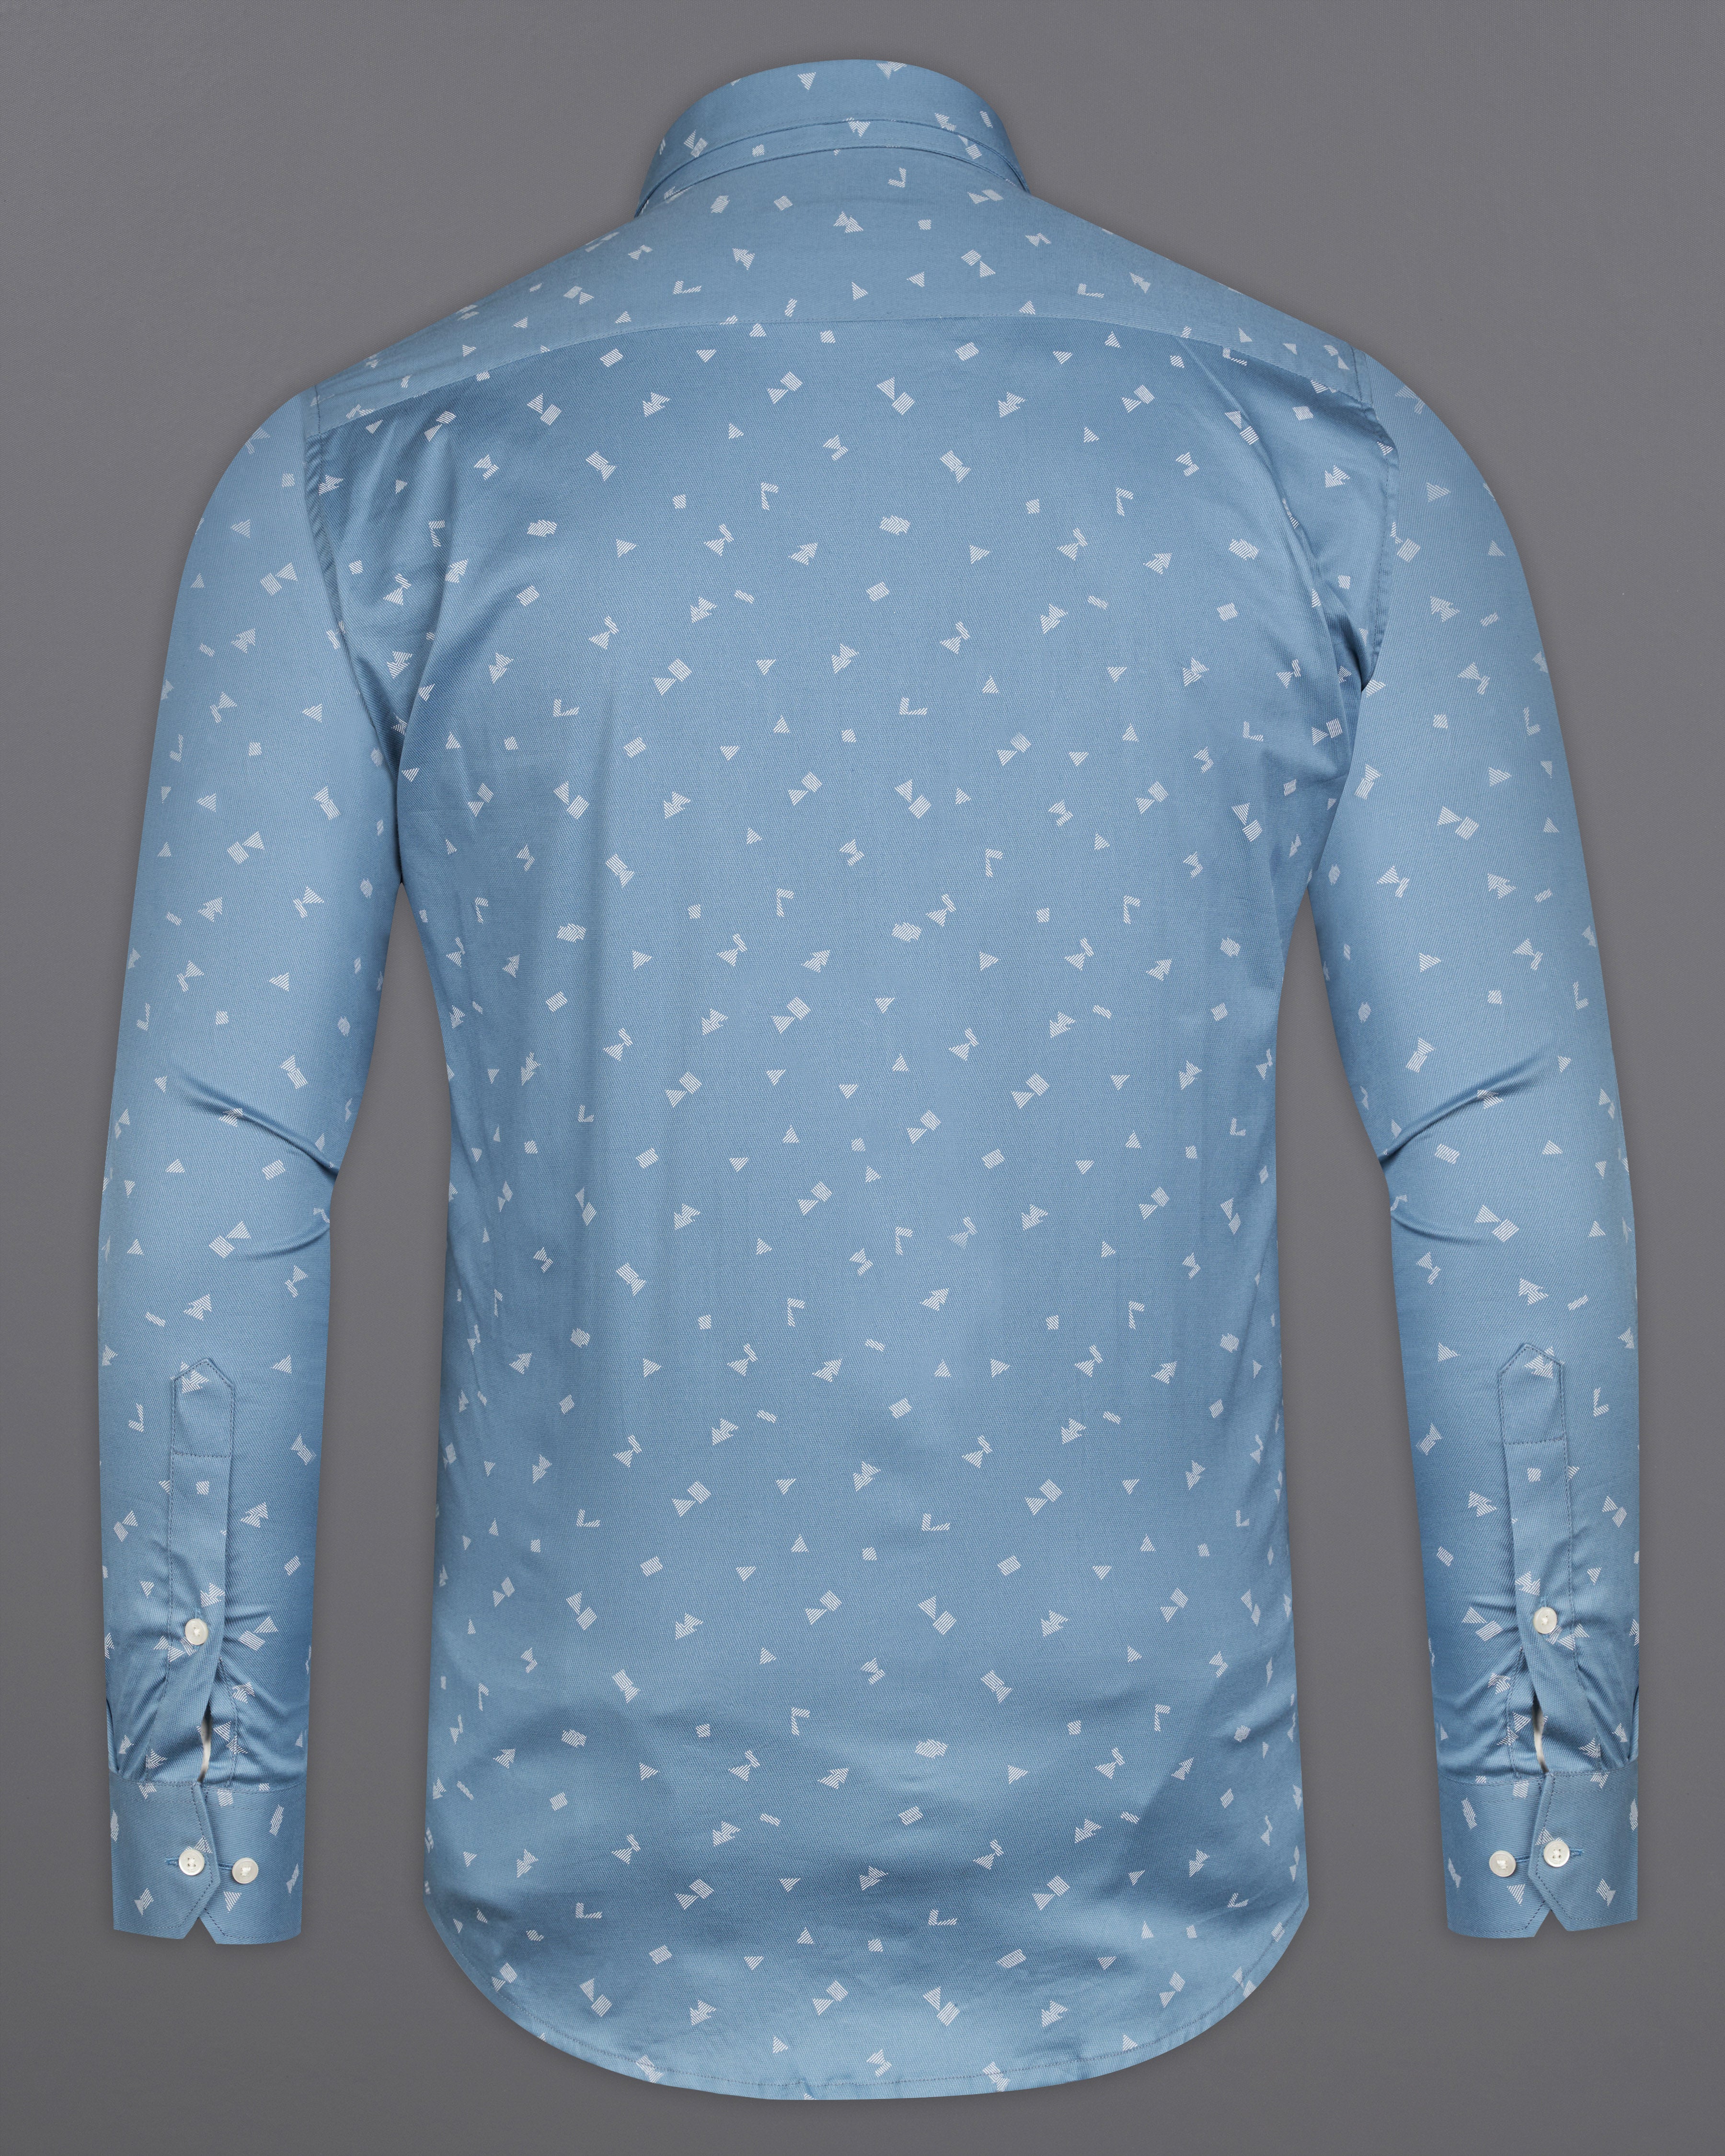 Glacier Blue Textured Twill Premium Cotton Double Collar Designer Shirt 9980-P432-38, 9980-P432-H-38, 9980-P432-39, 9980-P432-H-39, 9980-P432-40, 9980-P432-H-40, 9980-P432-42, 9980-P432-H-42, 9980-P432-44, 9980-P432-H-44, 9980-P432-46, 9980-P432-H-46, 9980-P432-48, 9980-P432-H-48, 9980-P432-50, 9980-P432-H-50, 9980-P432-52, 9980-P432-H-52	